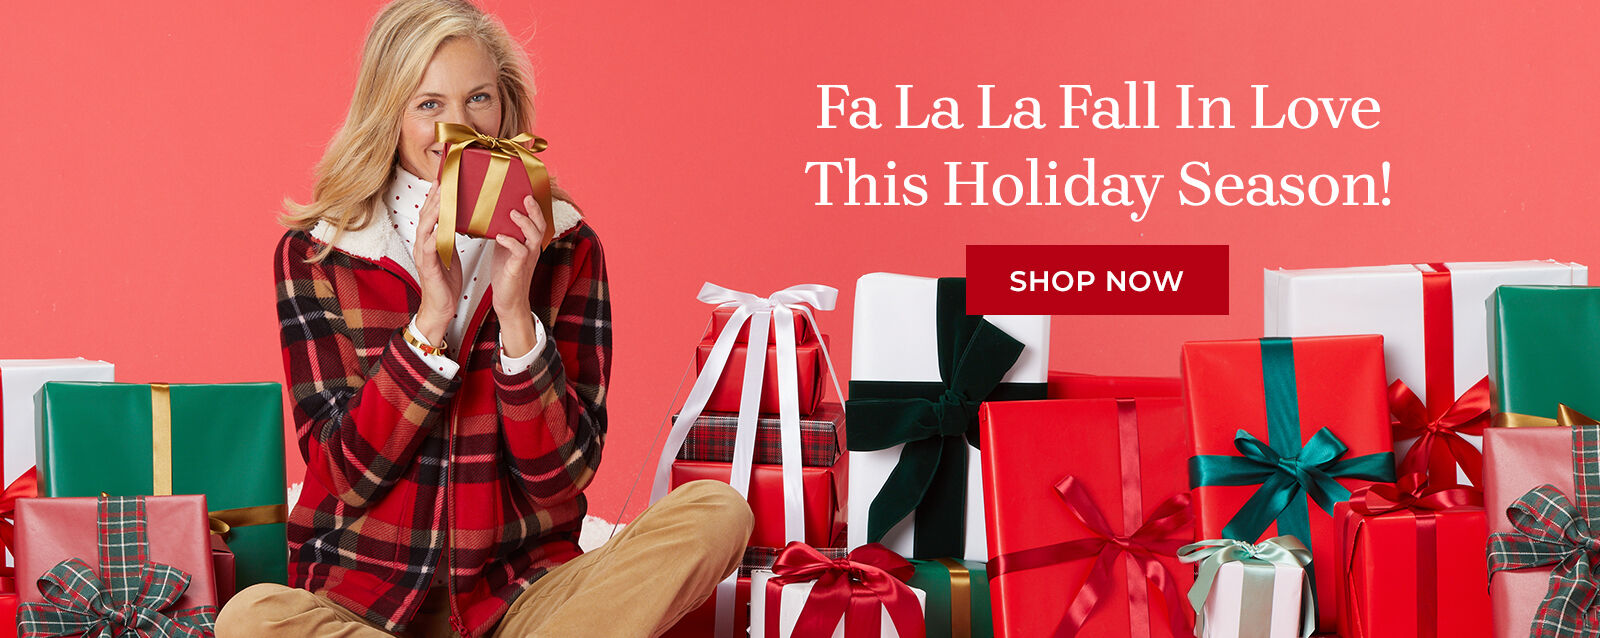 fa la la fall in love this holiday season! shop now